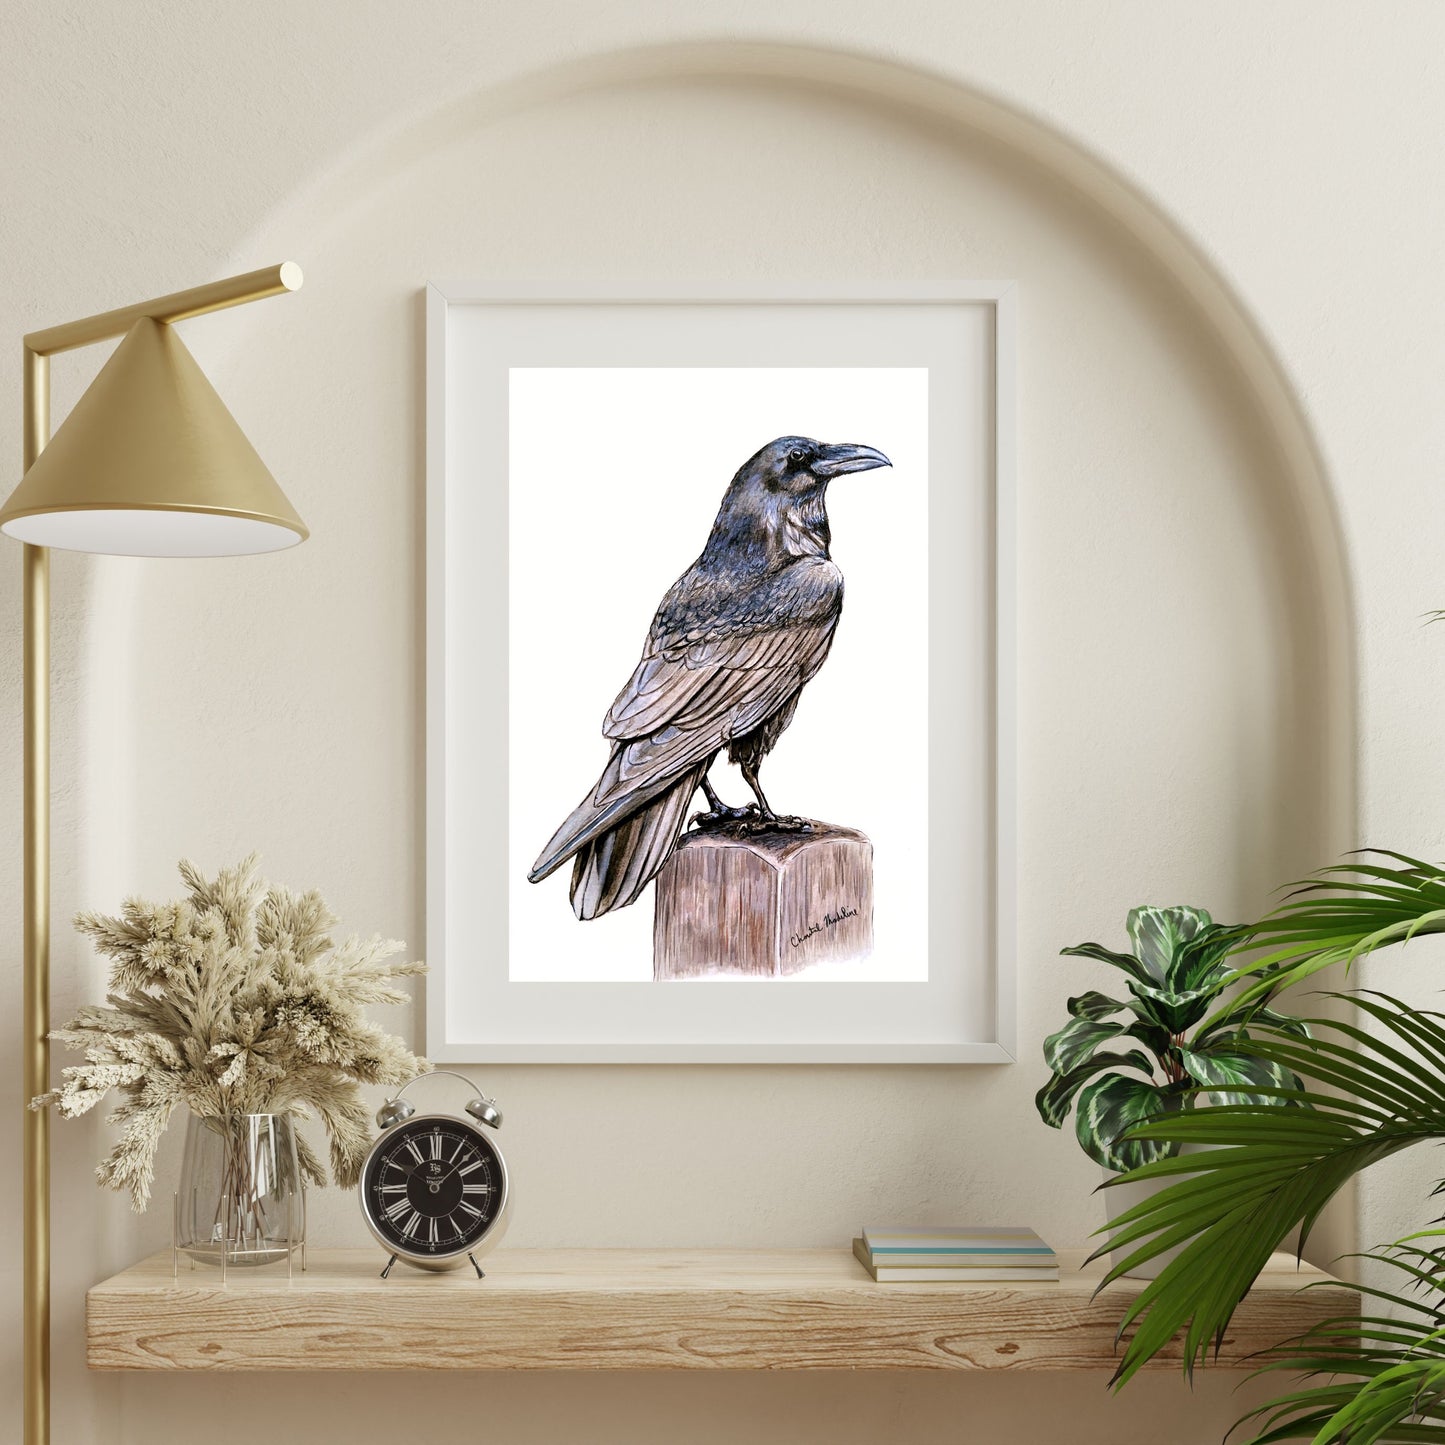 Raven art print, Wildlife art print, Giclee print on fine art paper